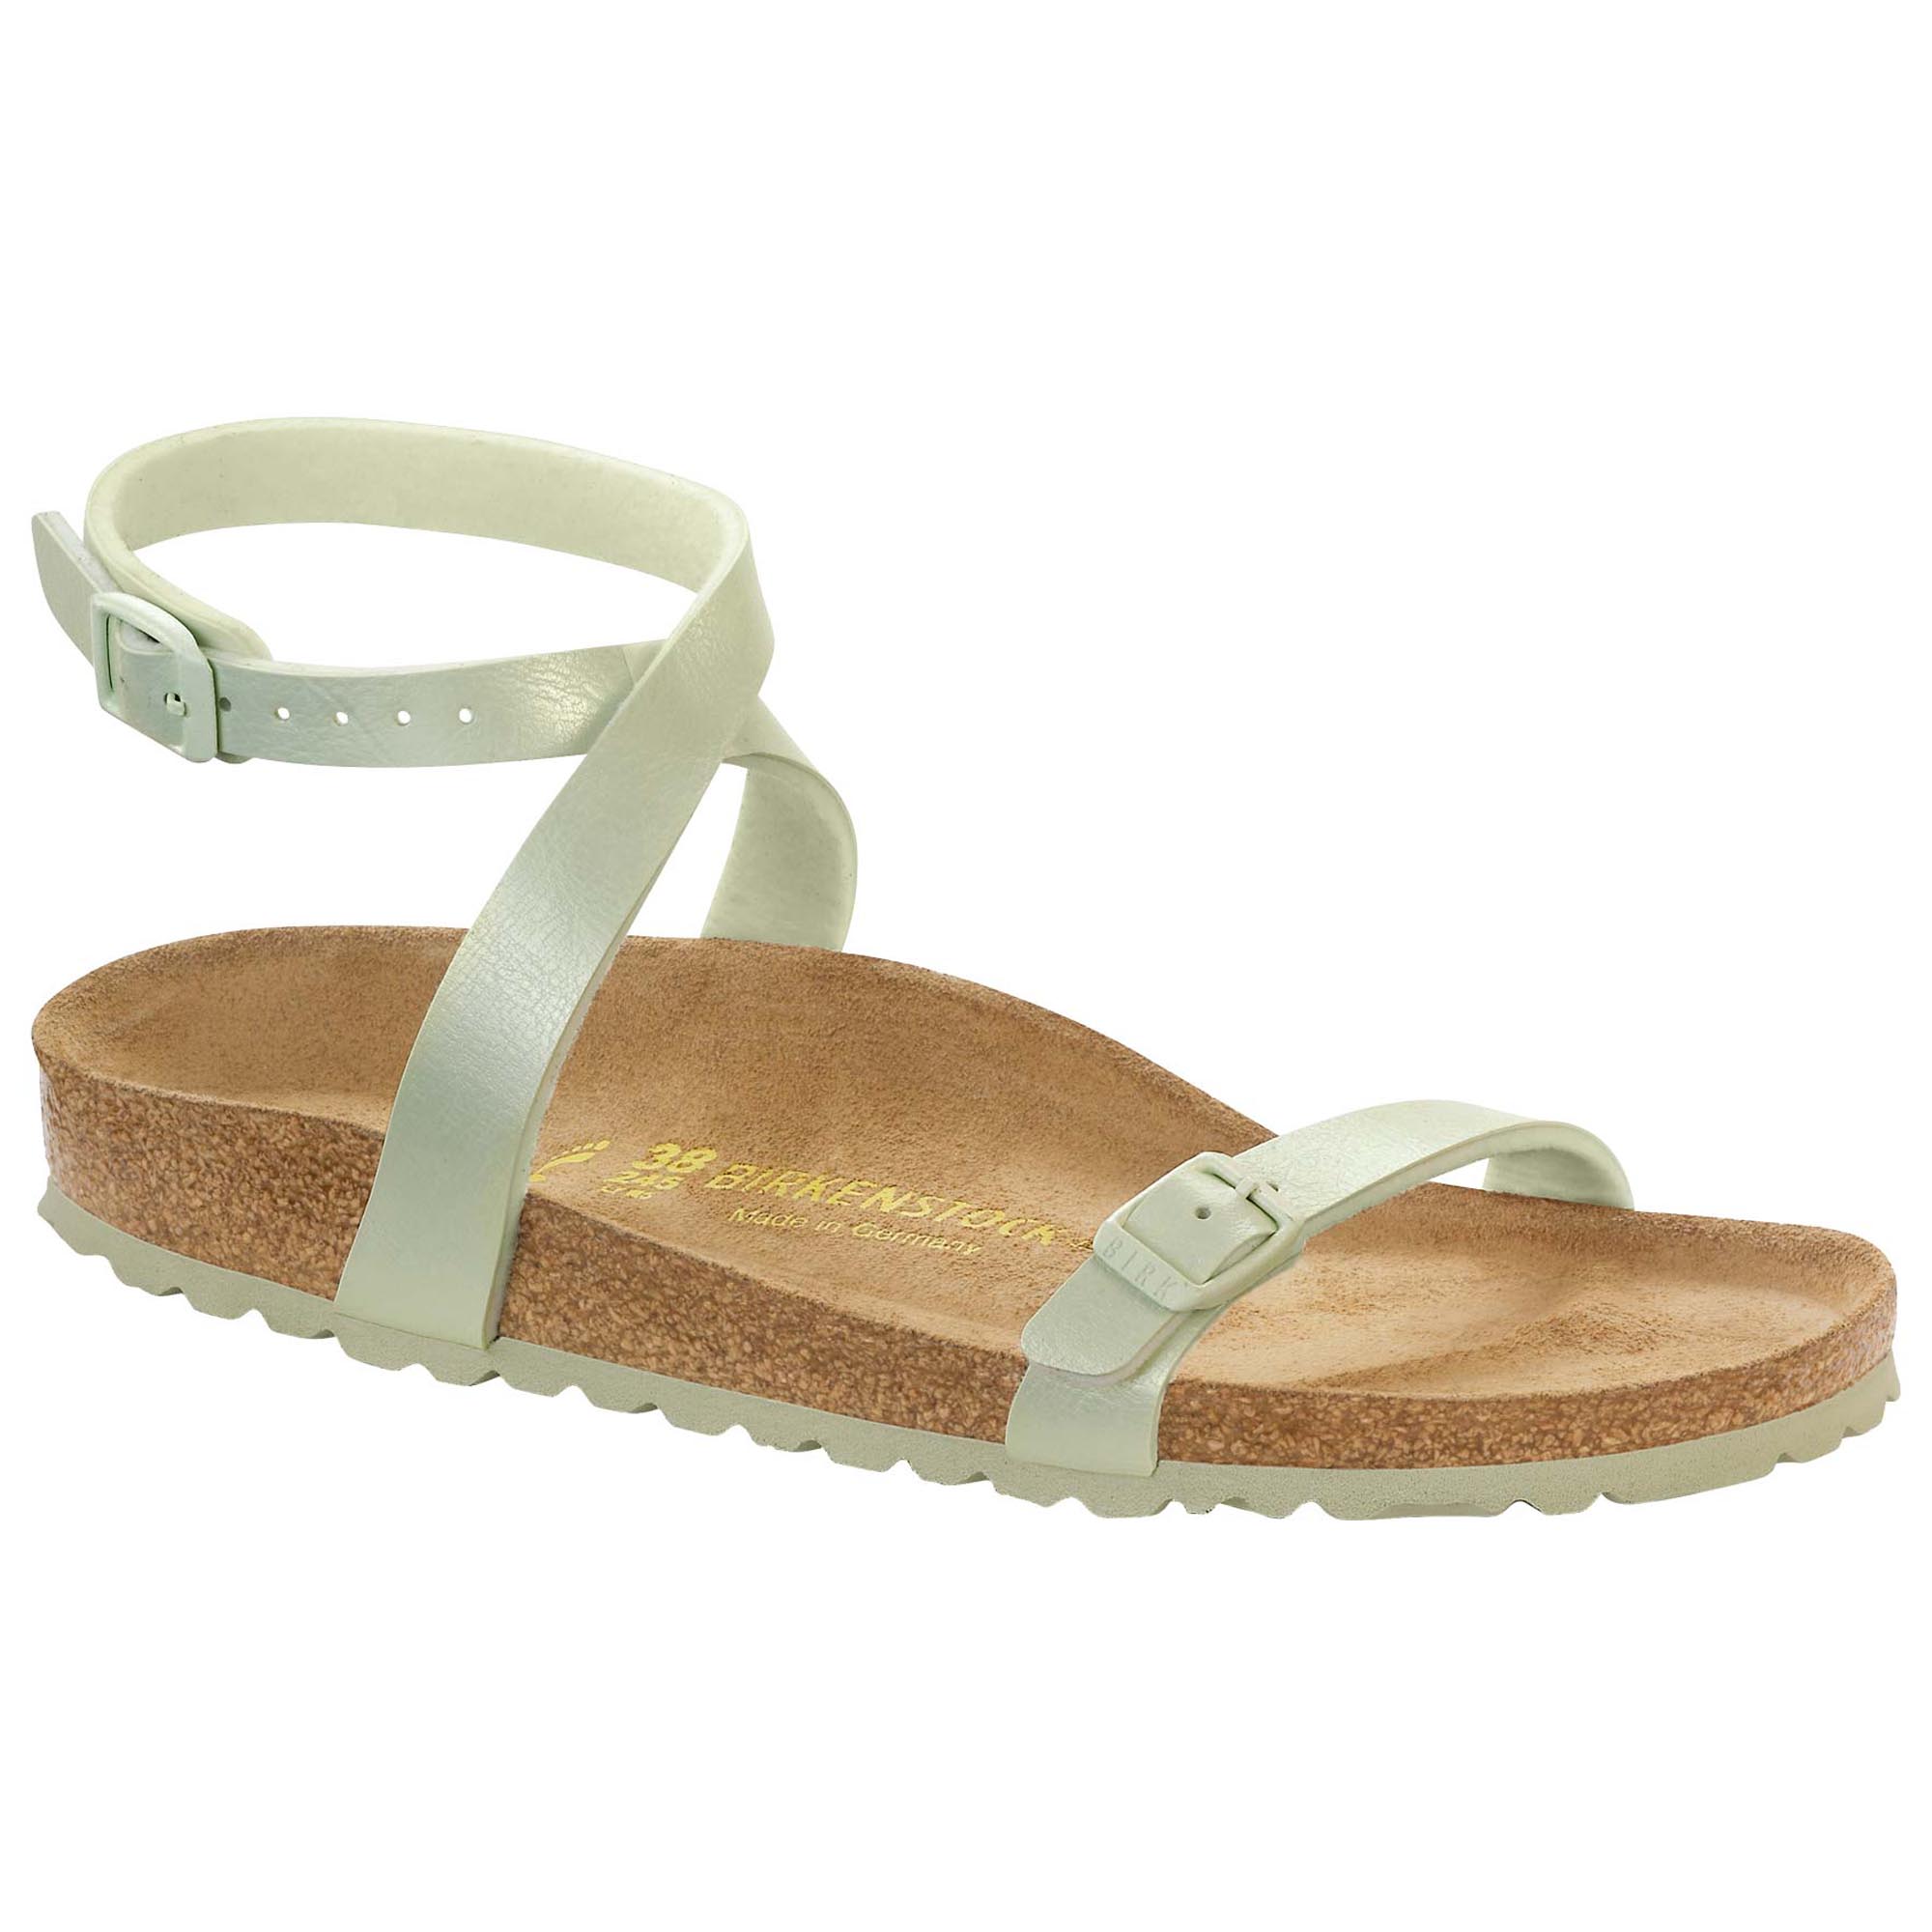 birkenstock women's daloa sandal